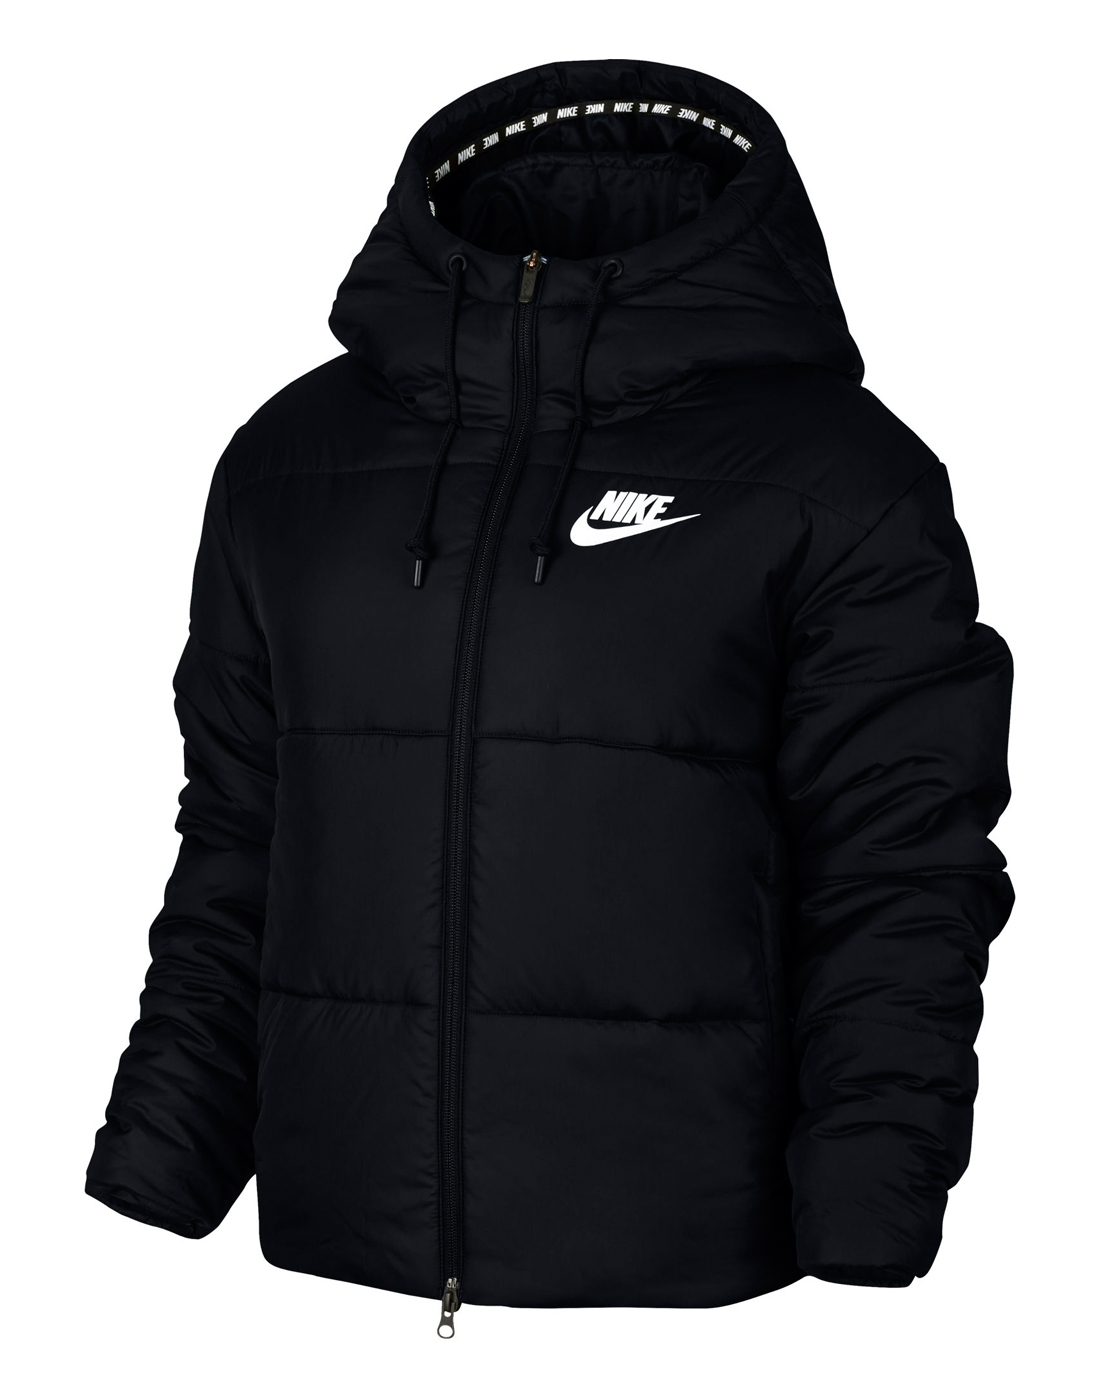 Nike Womens Puffa Jacket - Black | Life Style Sports IE